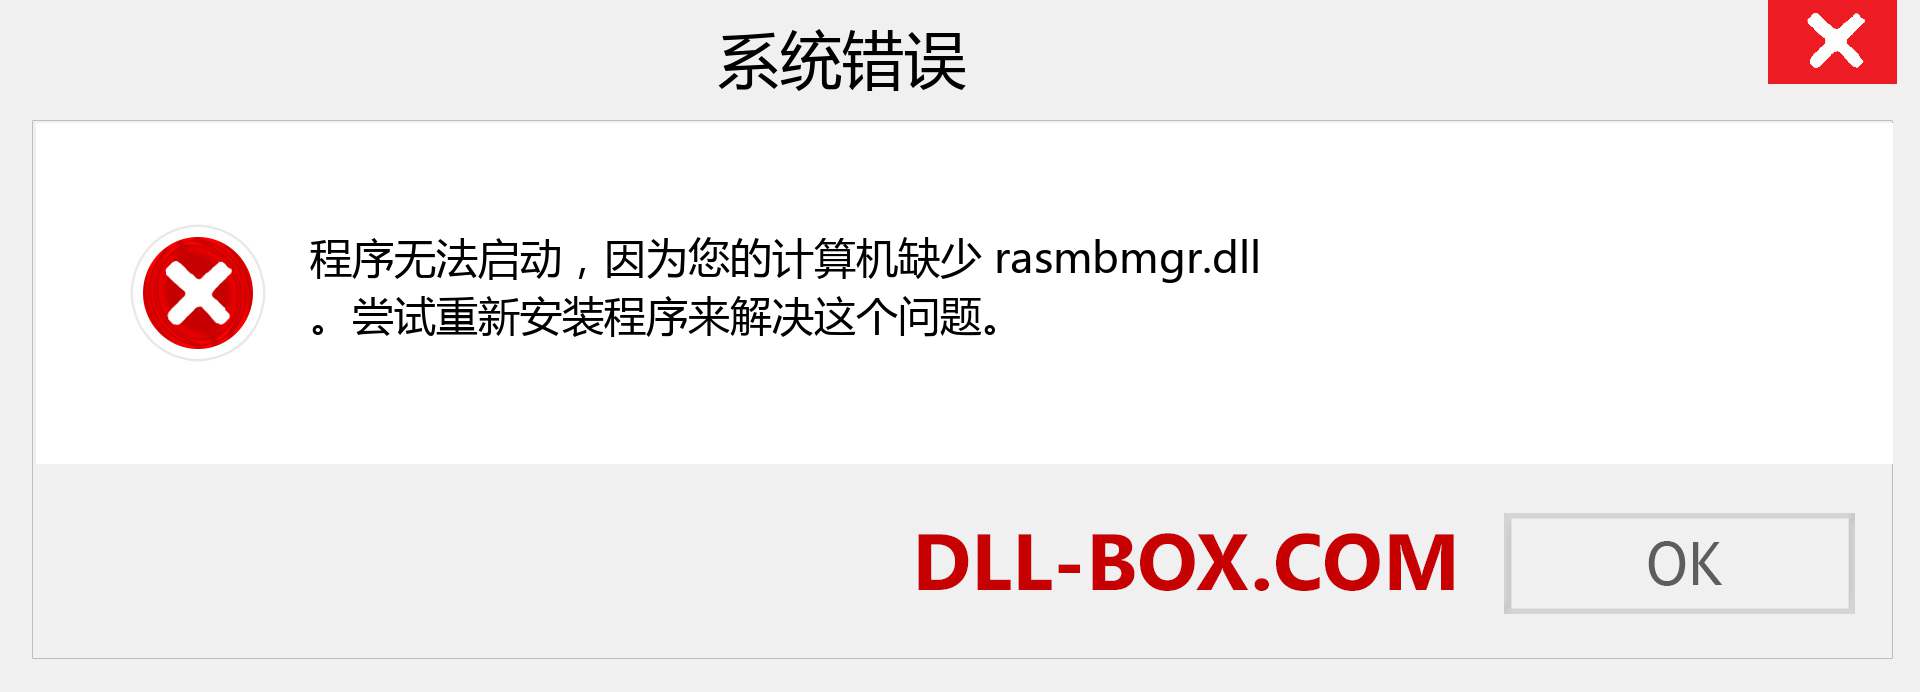 rasmbmgr.dll 文件丢失？。 适用于 Windows 7、8、10 的下载 - 修复 Windows、照片、图像上的 rasmbmgr dll 丢失错误